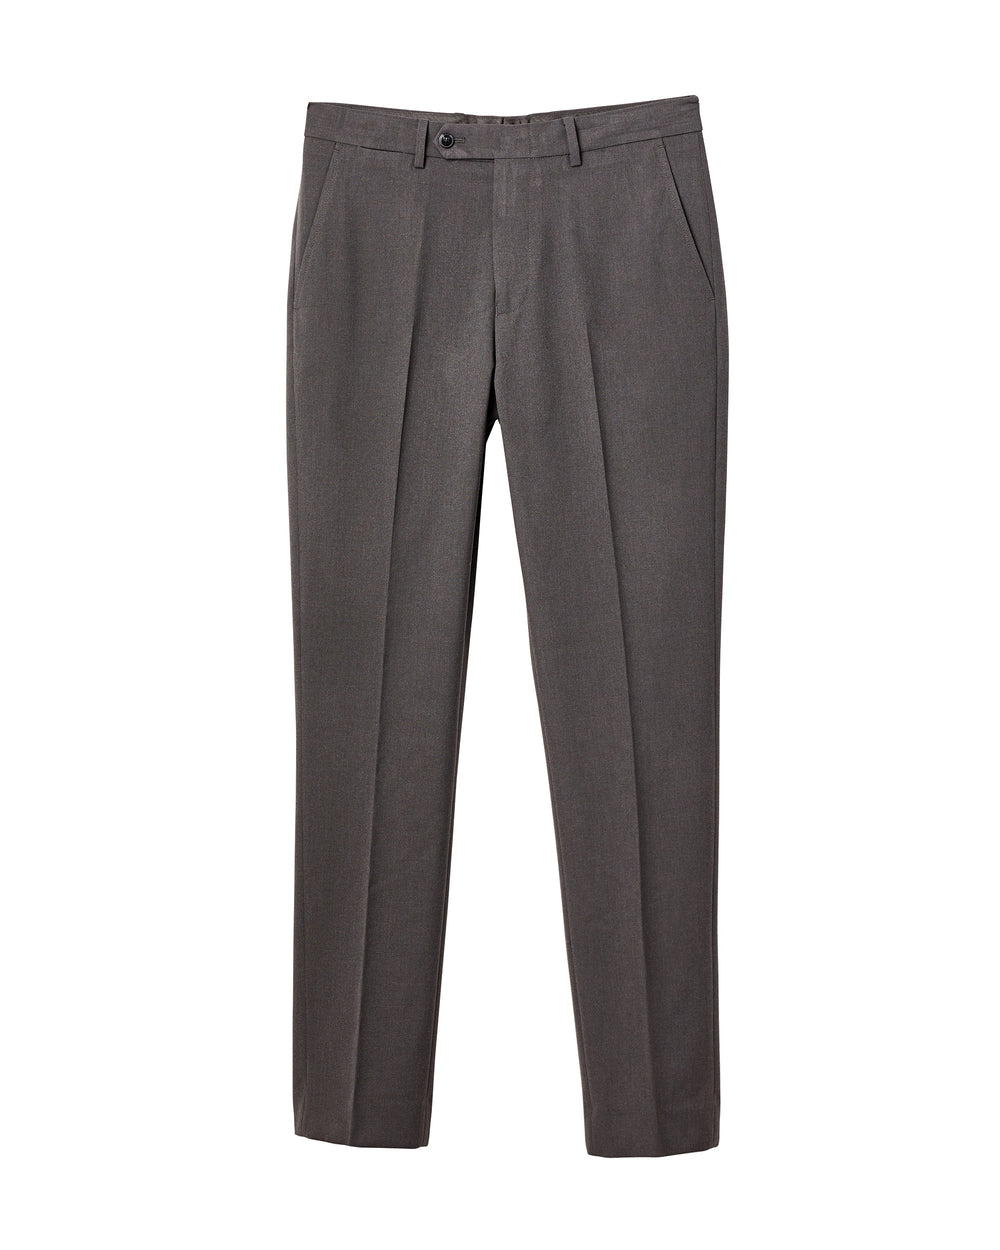 Cave Bi-Stretch Flat Front Suit Pant - Dark Grey